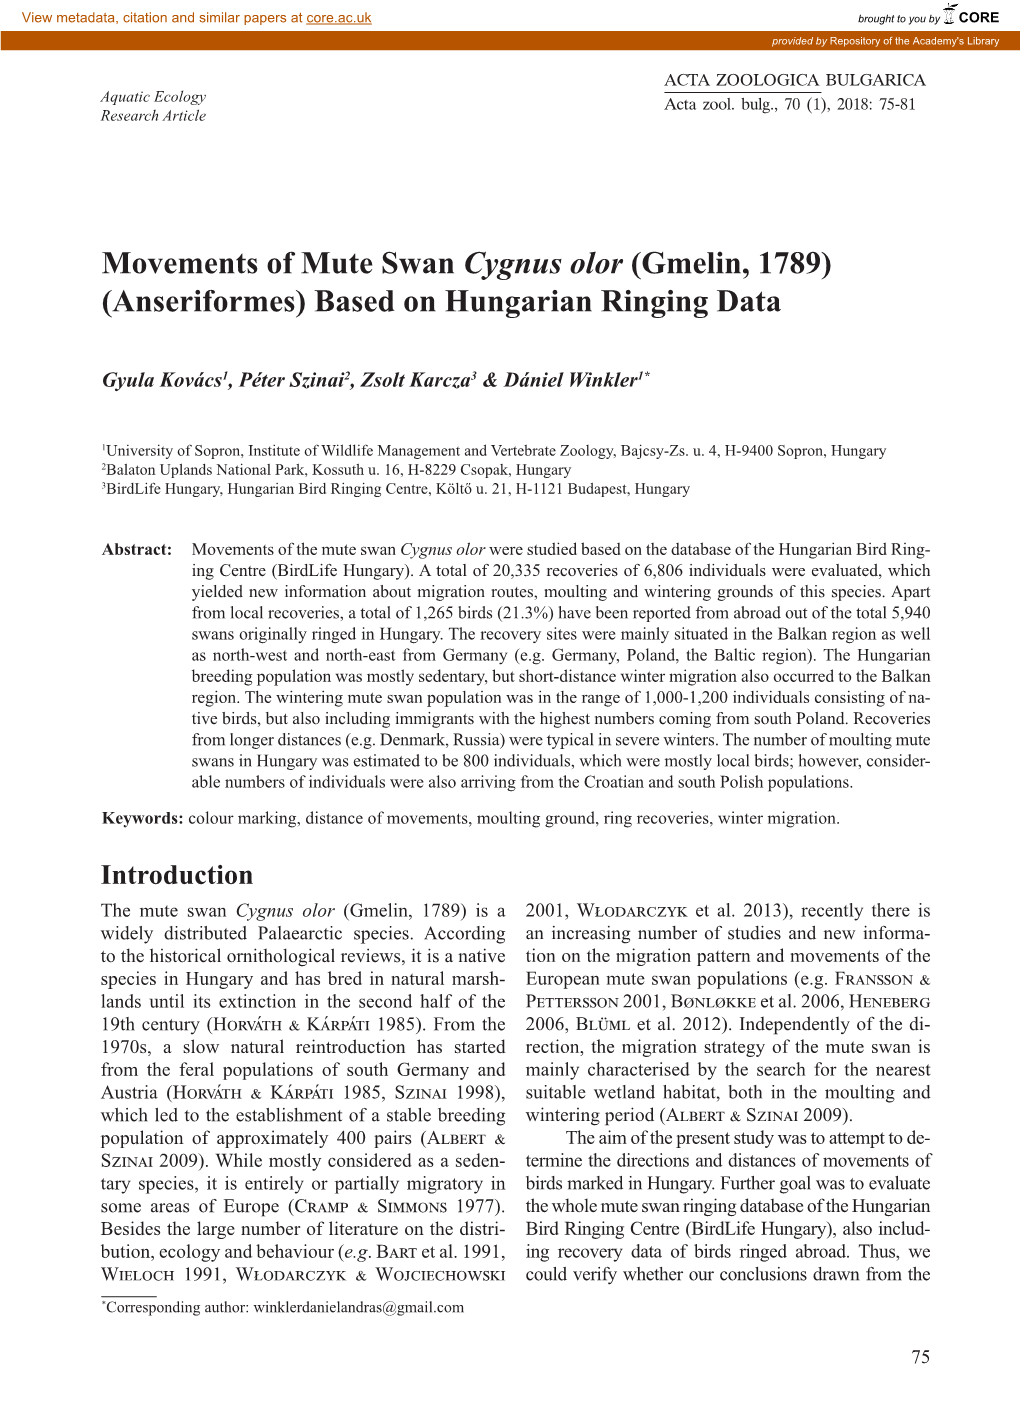 Movements of Mute Swan Cygnus Olor (Gmelin, 1789) (Anseriformes) Based on Hungarian Ringing Data